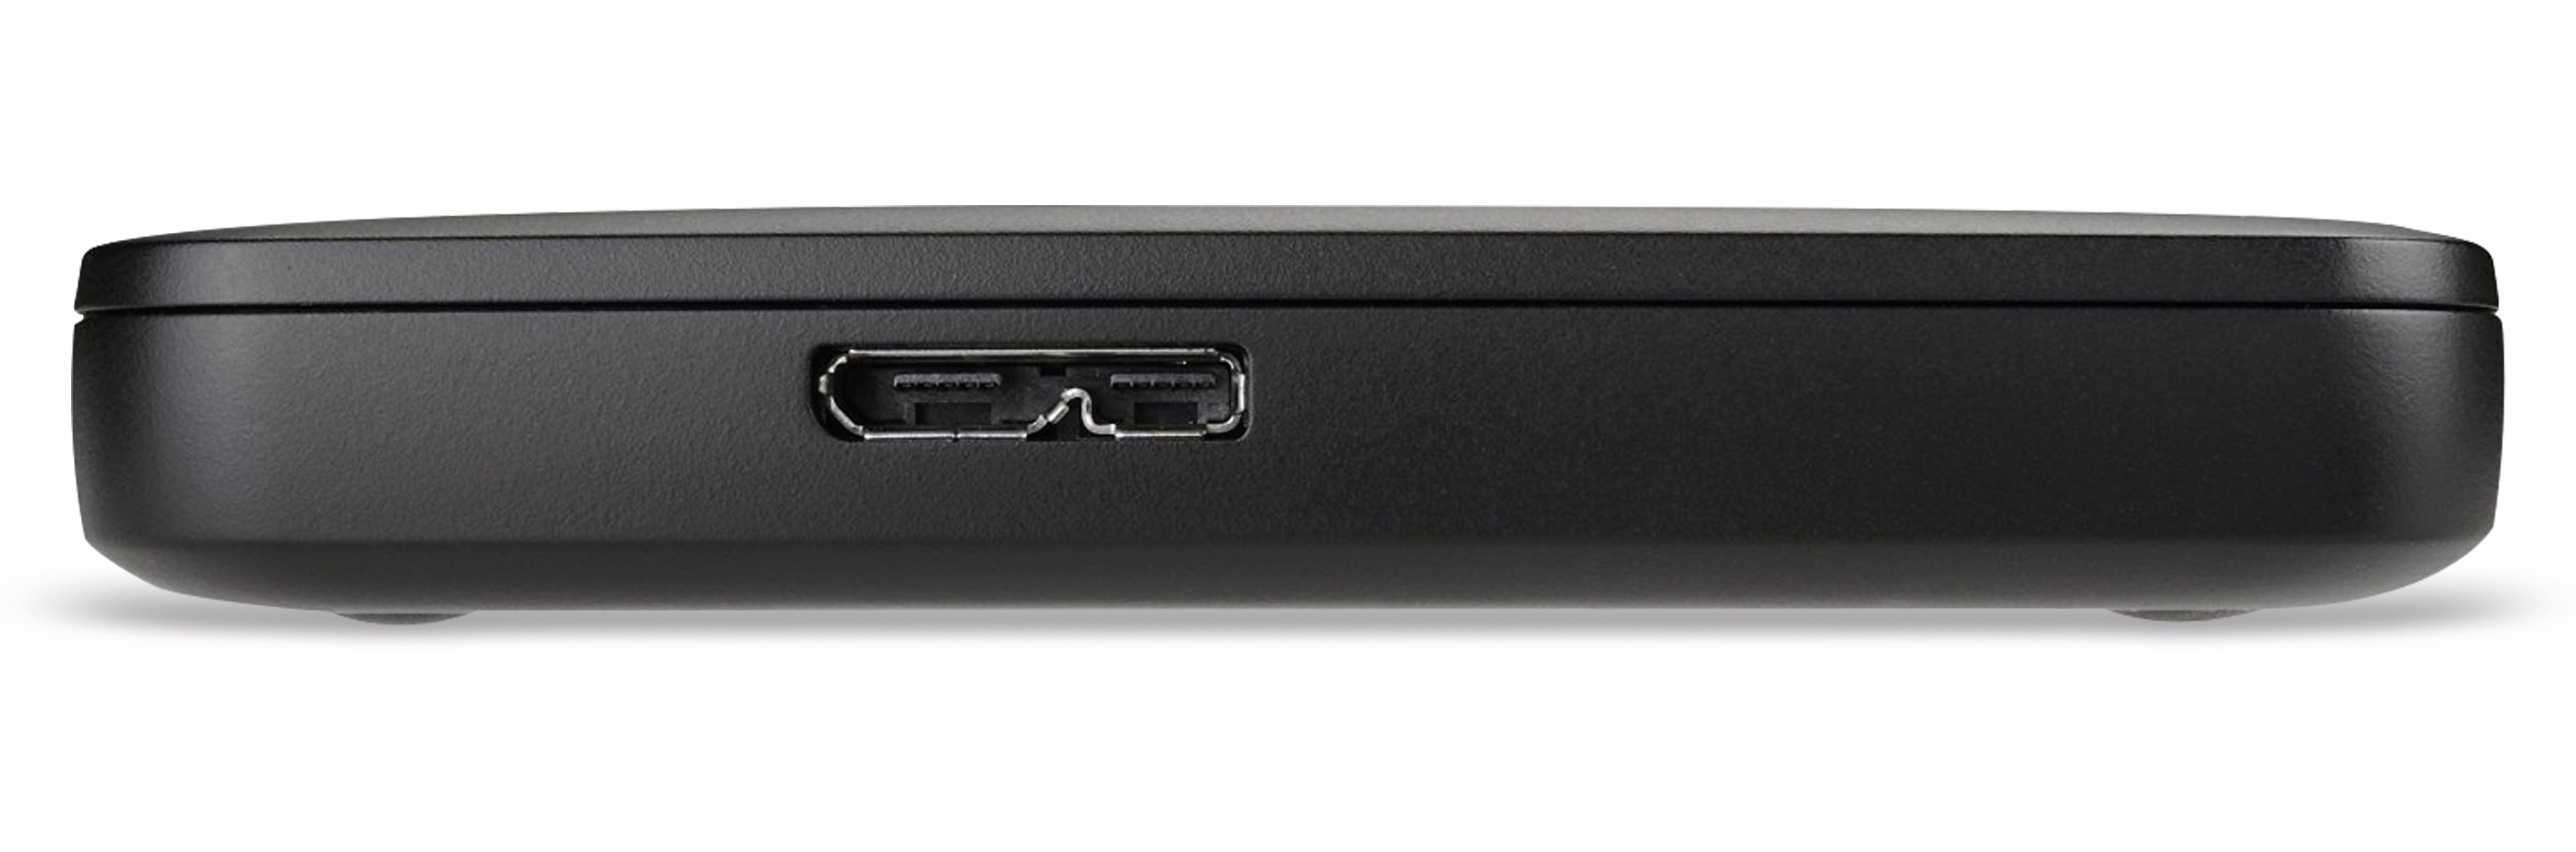 TOSHIBA USB 3.0-HDD Canvio Basics, 1 TB, schwarz